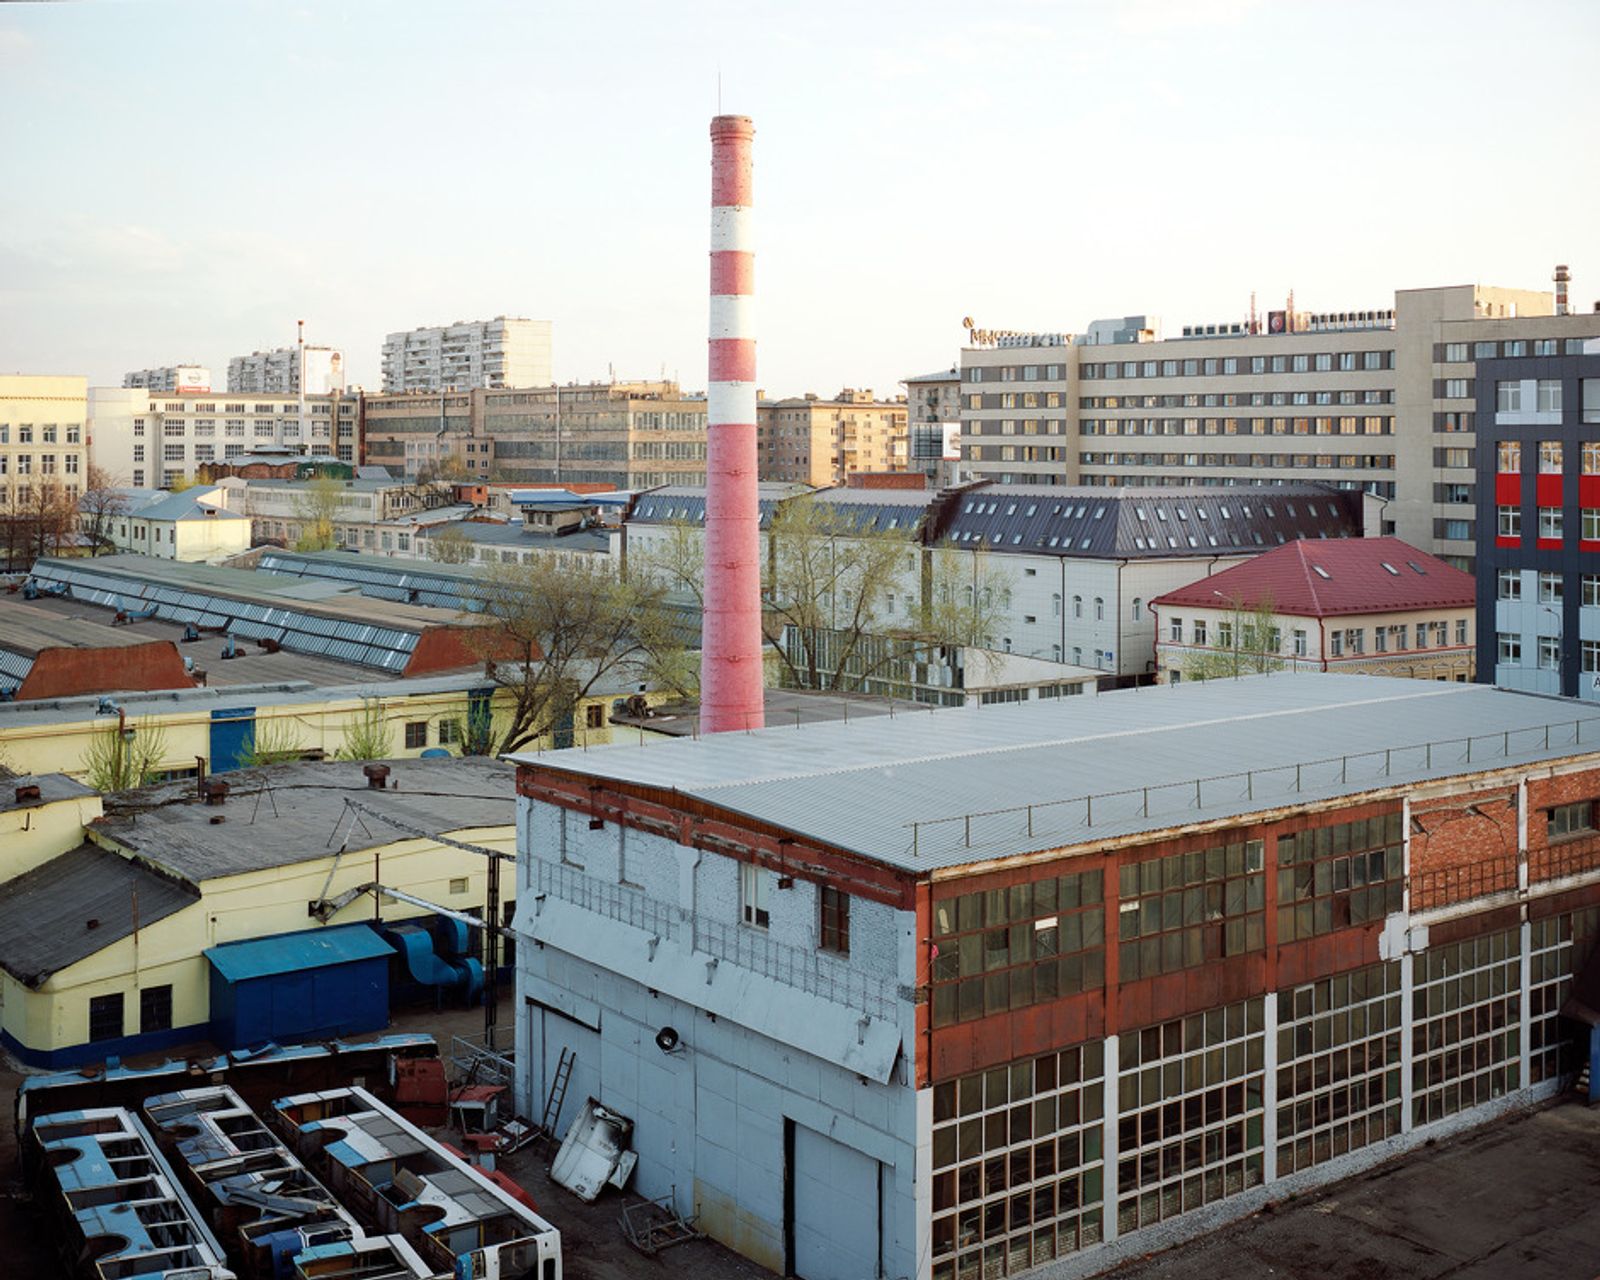 © Petr Antonov - Trolleybus depot, chimney, trolleybuses, industrial compound, office buildings, trees